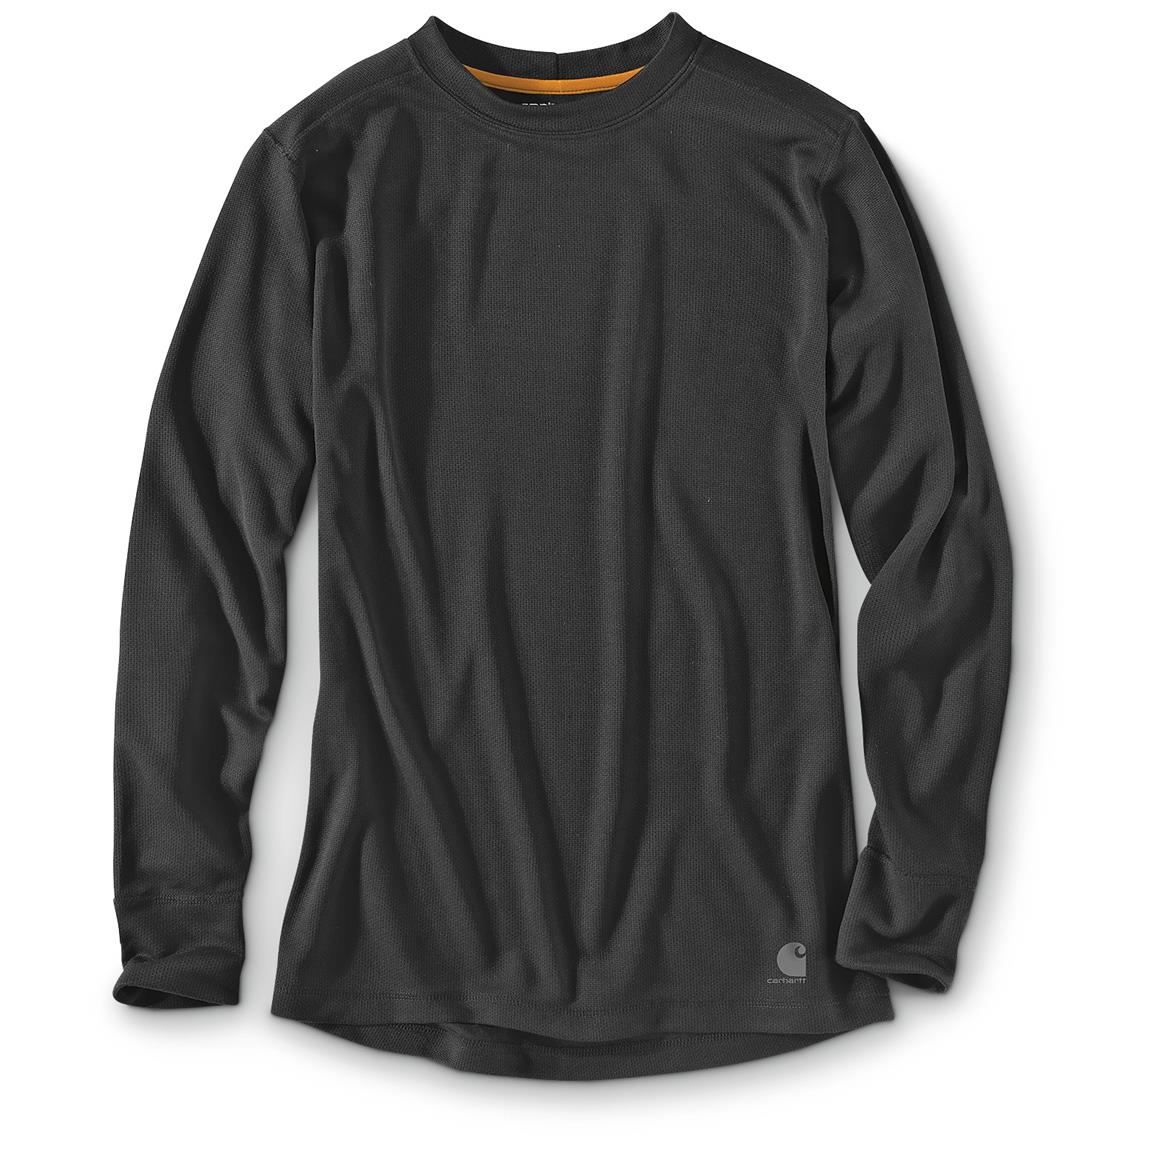 Carhartt Men's Base Force Cold Weather Crewneck Thermal Shirt - 666577